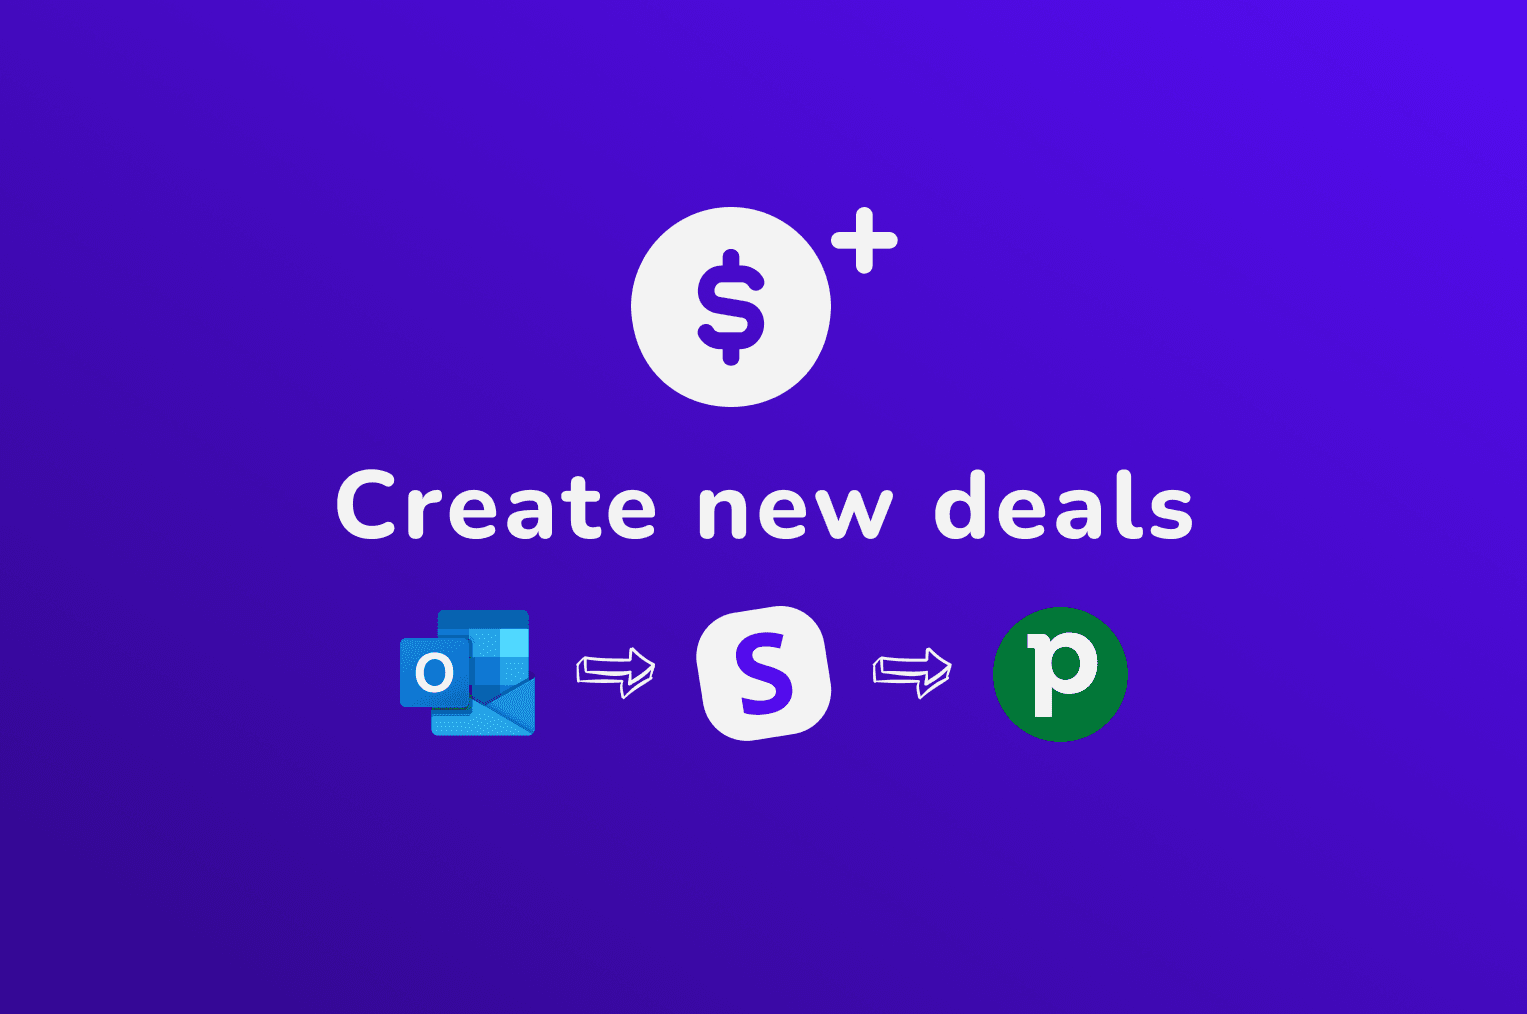 Create new deals